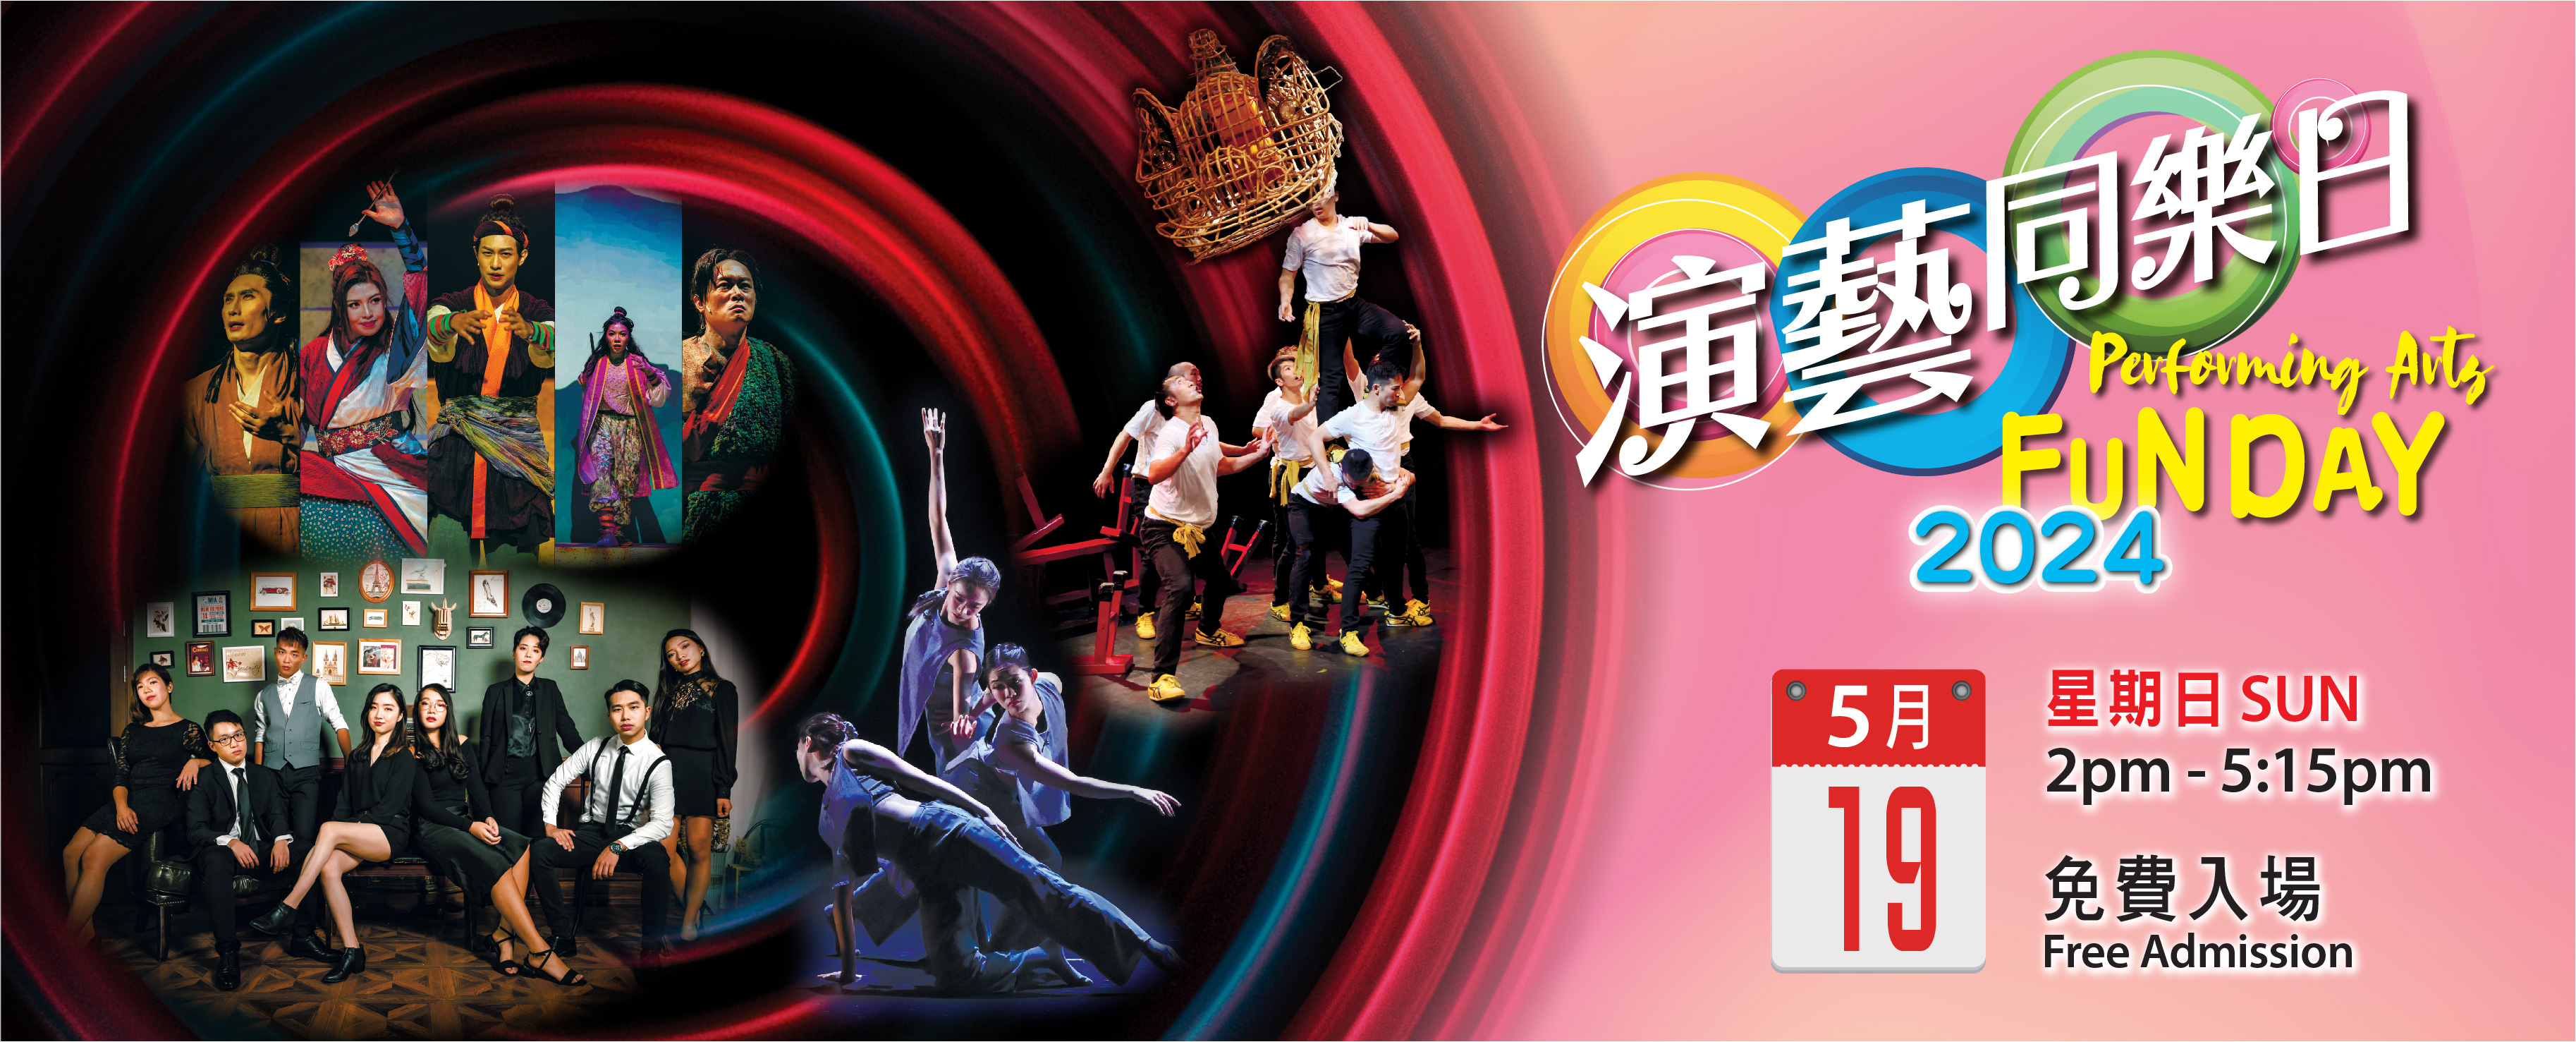 Performing Arts Fun Day 2024@ Tuen Mun Town Hall